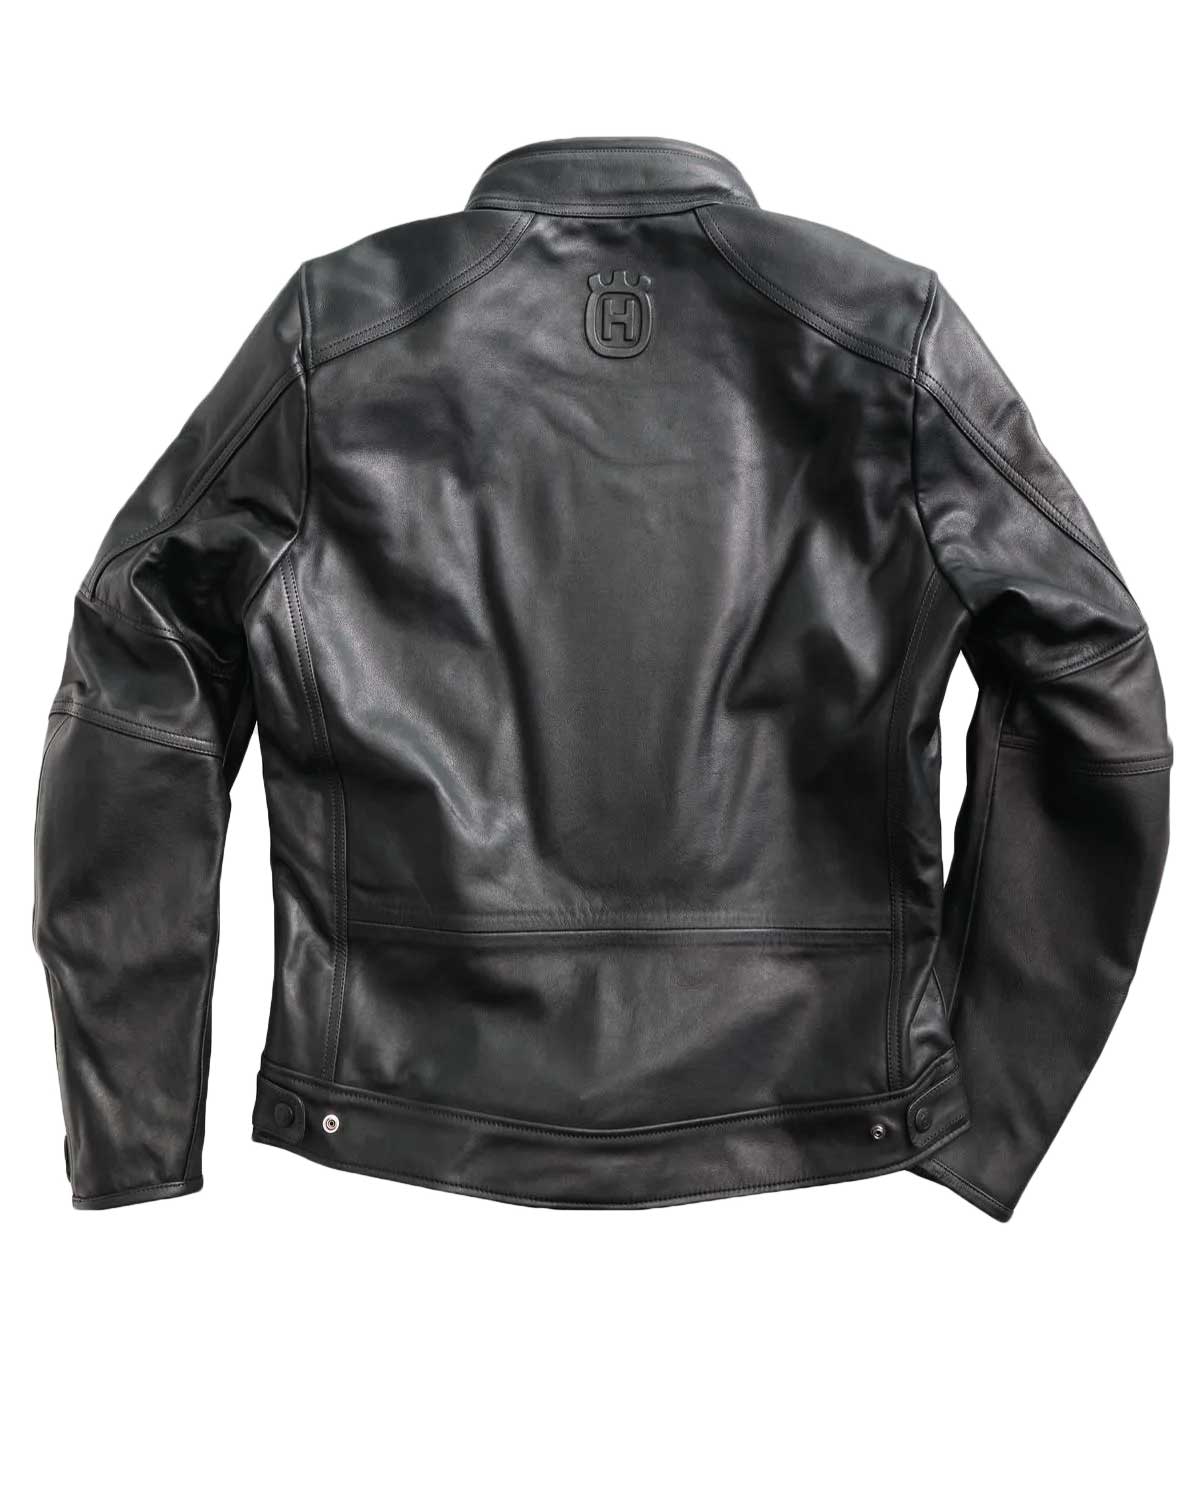 Husqvarna Black Leather Motorcycle Jacket | Elite Jacket